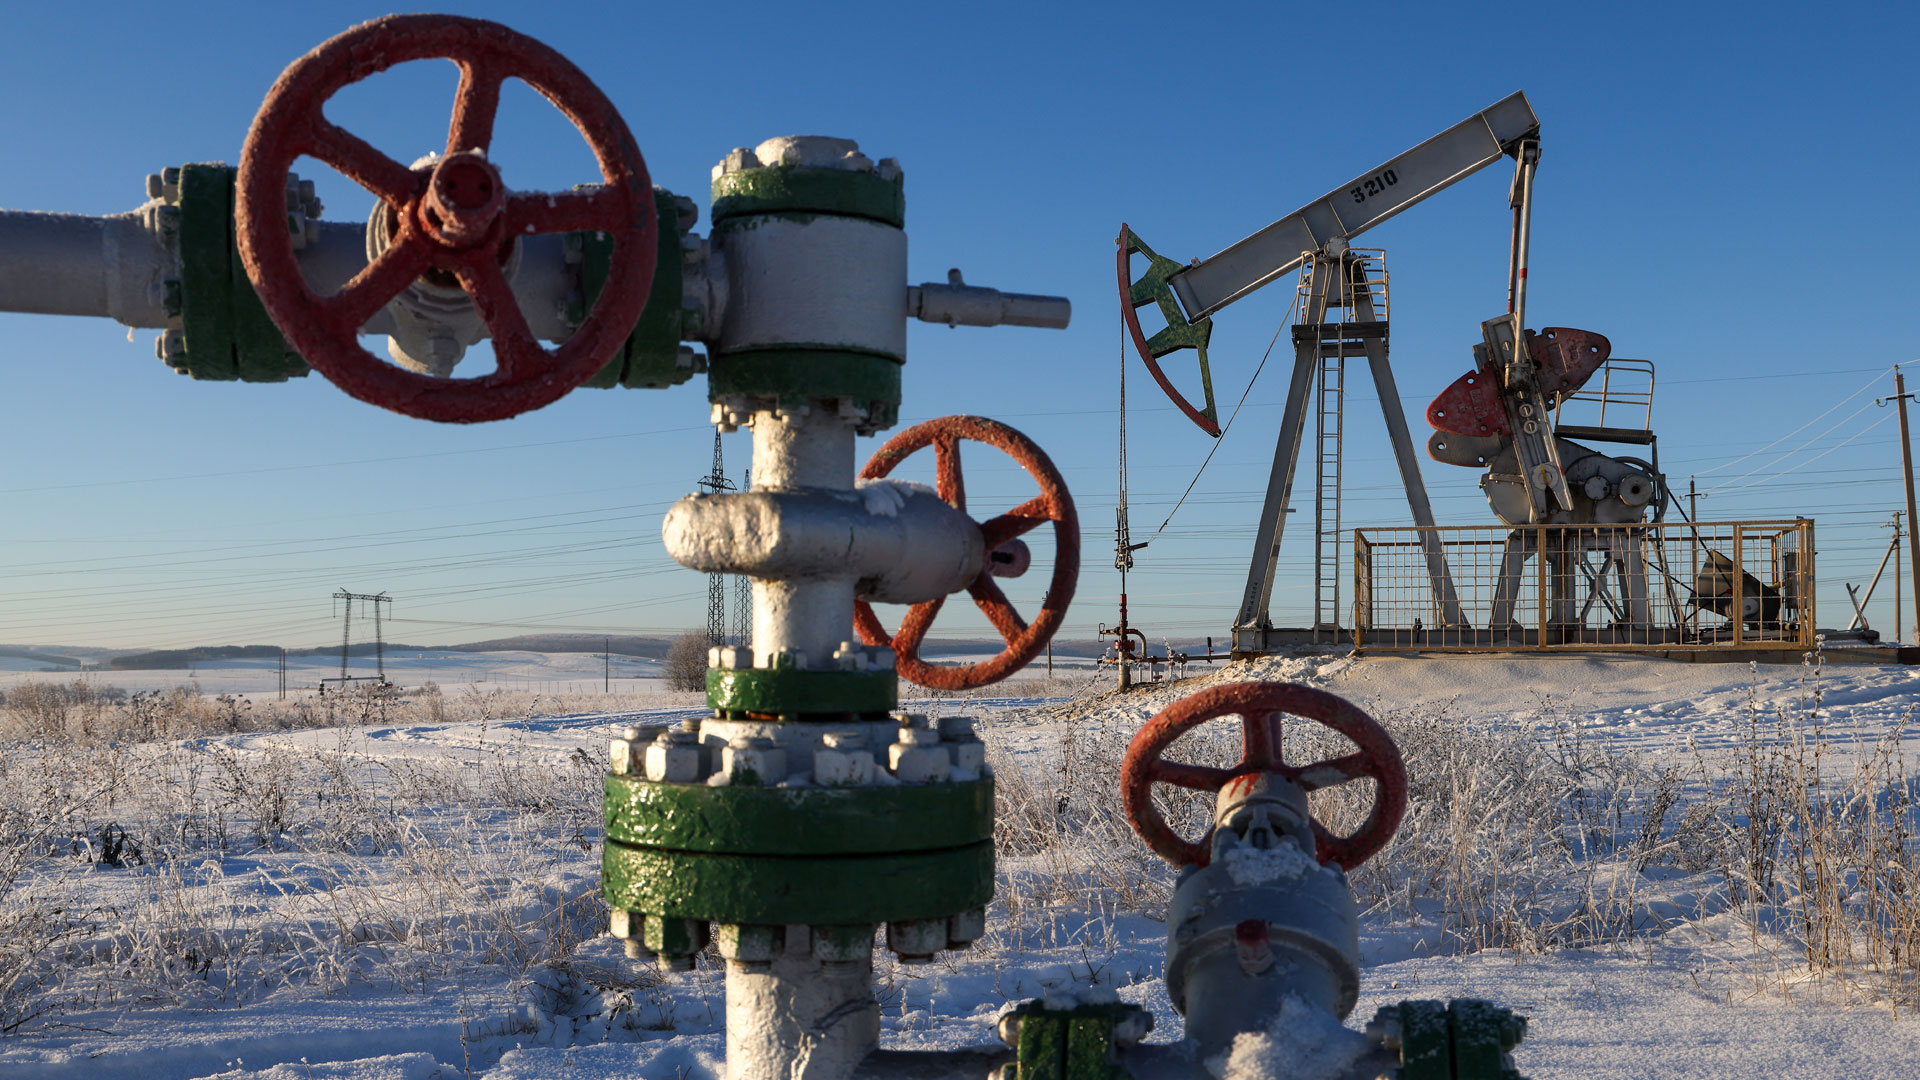 Ölbohrstelle in Tatarstan, Russland | picture alliance/dpa/TASS